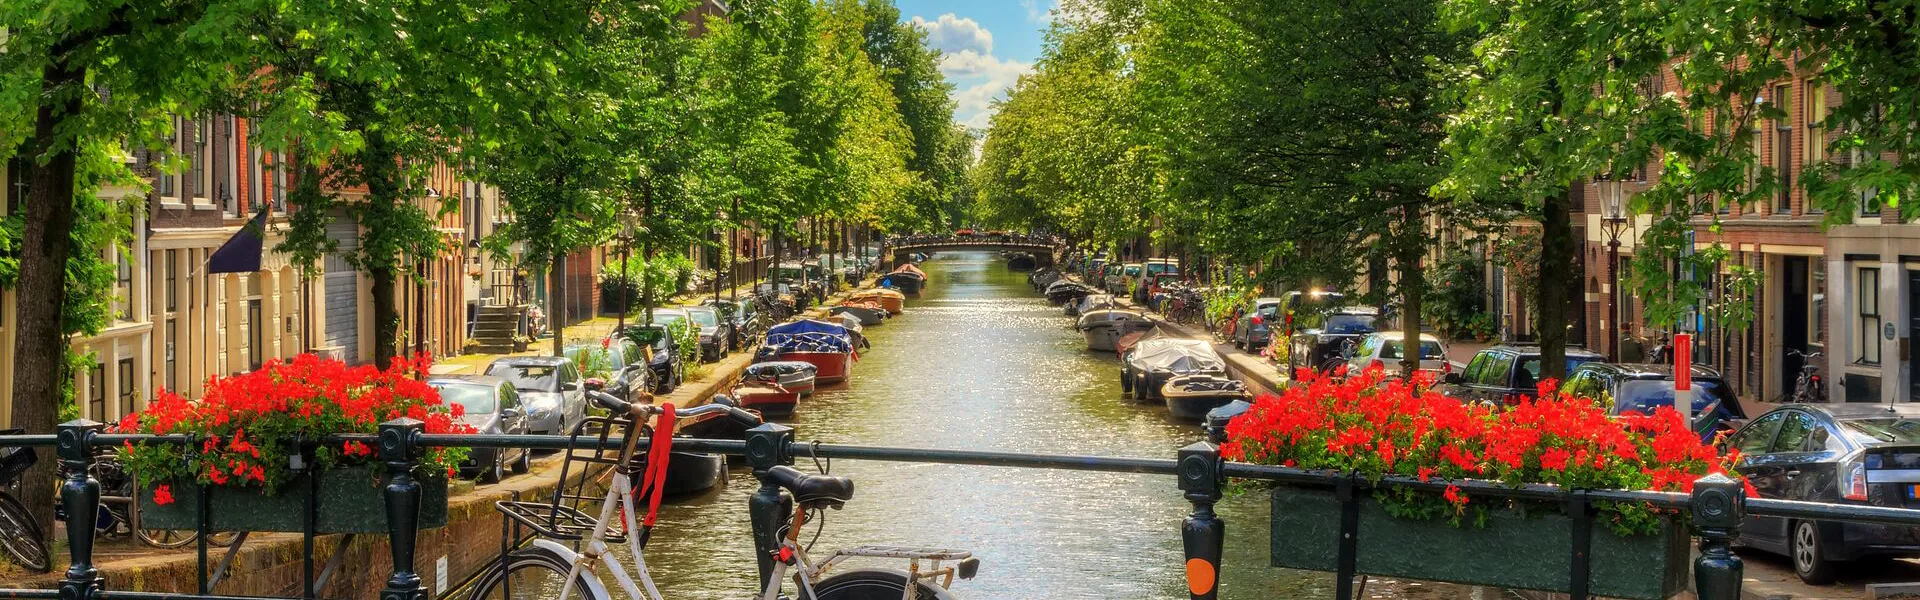 Bike on red summer bridge, Amsterdam